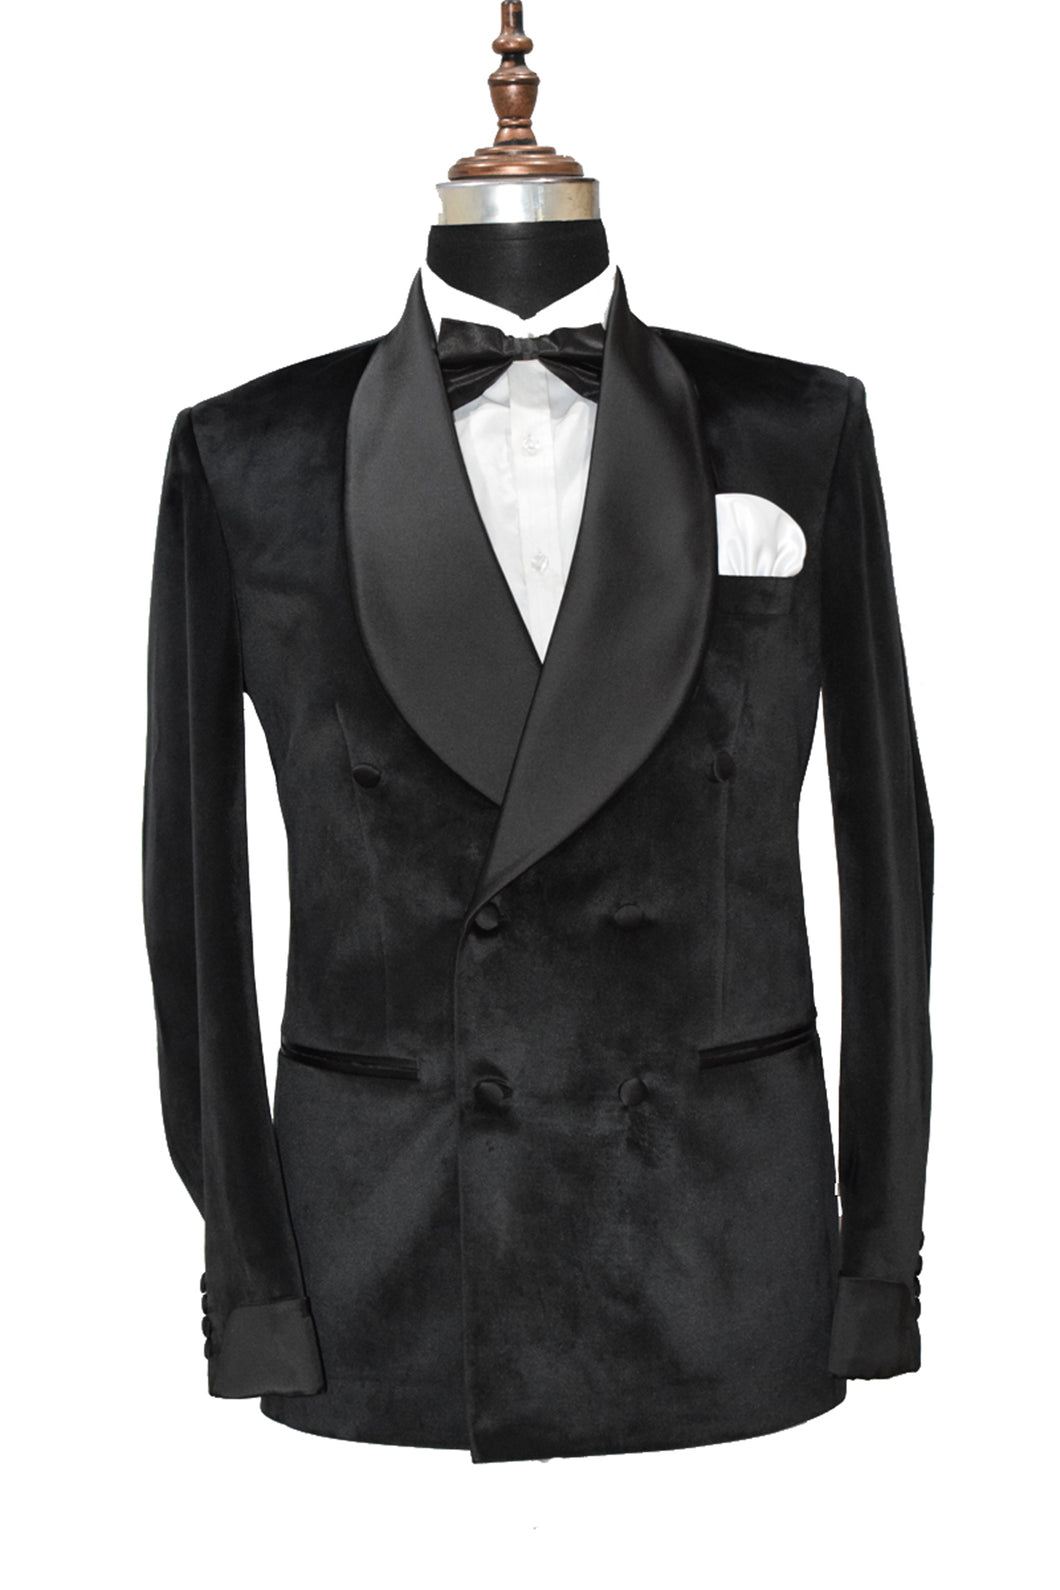 Men Black Smoking Jacket Wedding Party Wear Blazer - TrendsfashionIN